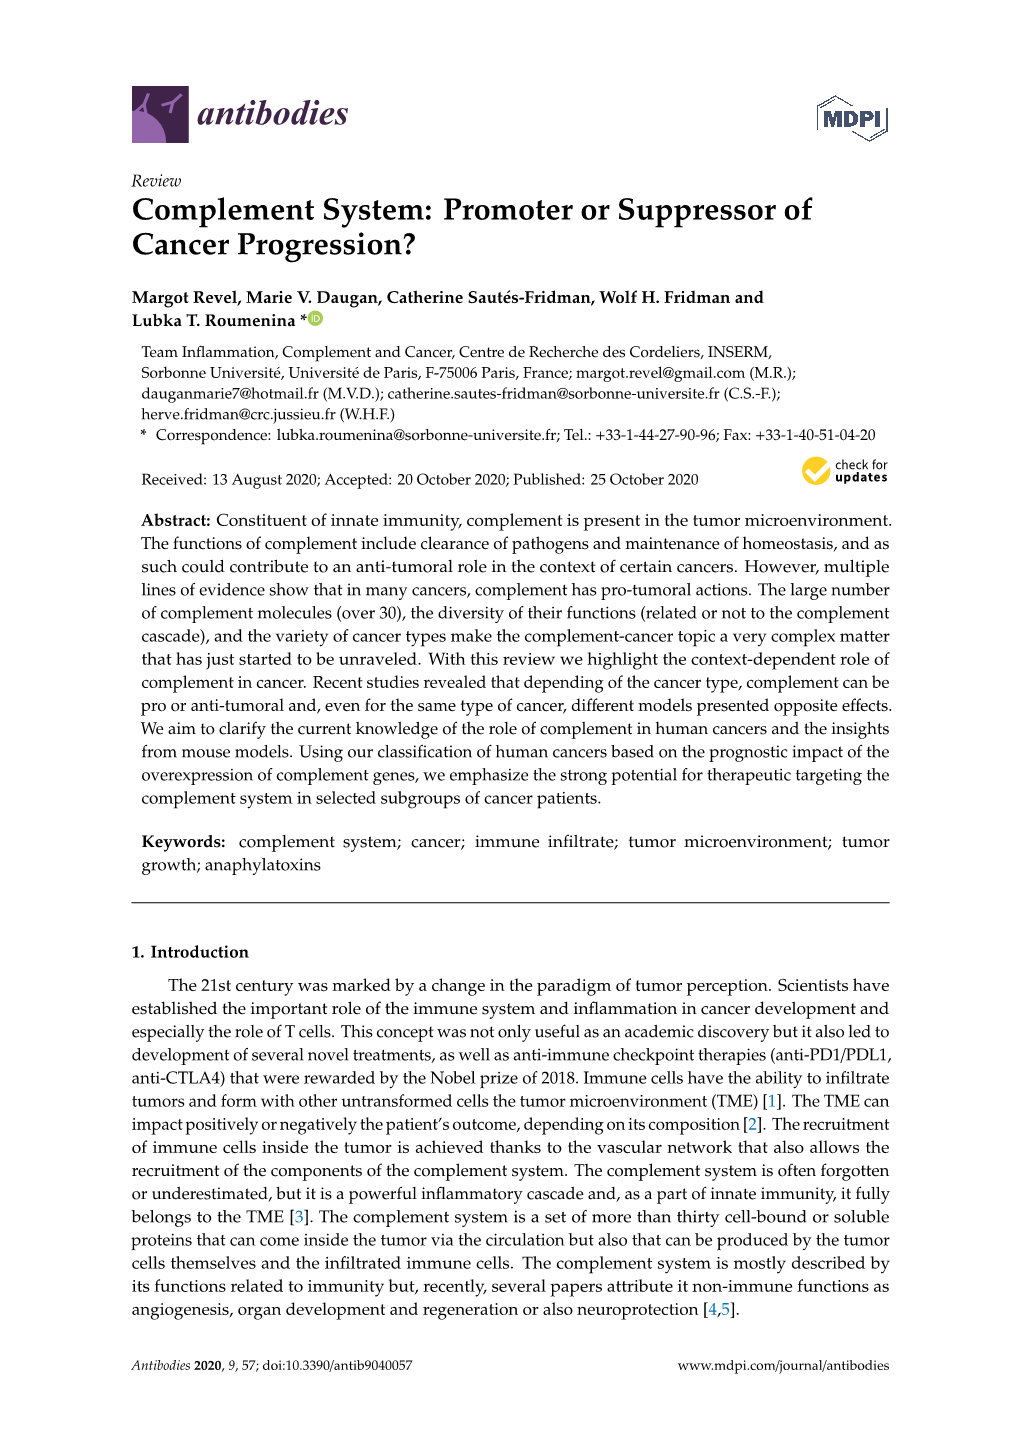 Complement System: Promoter Or Suppressor of Cancer Progression?